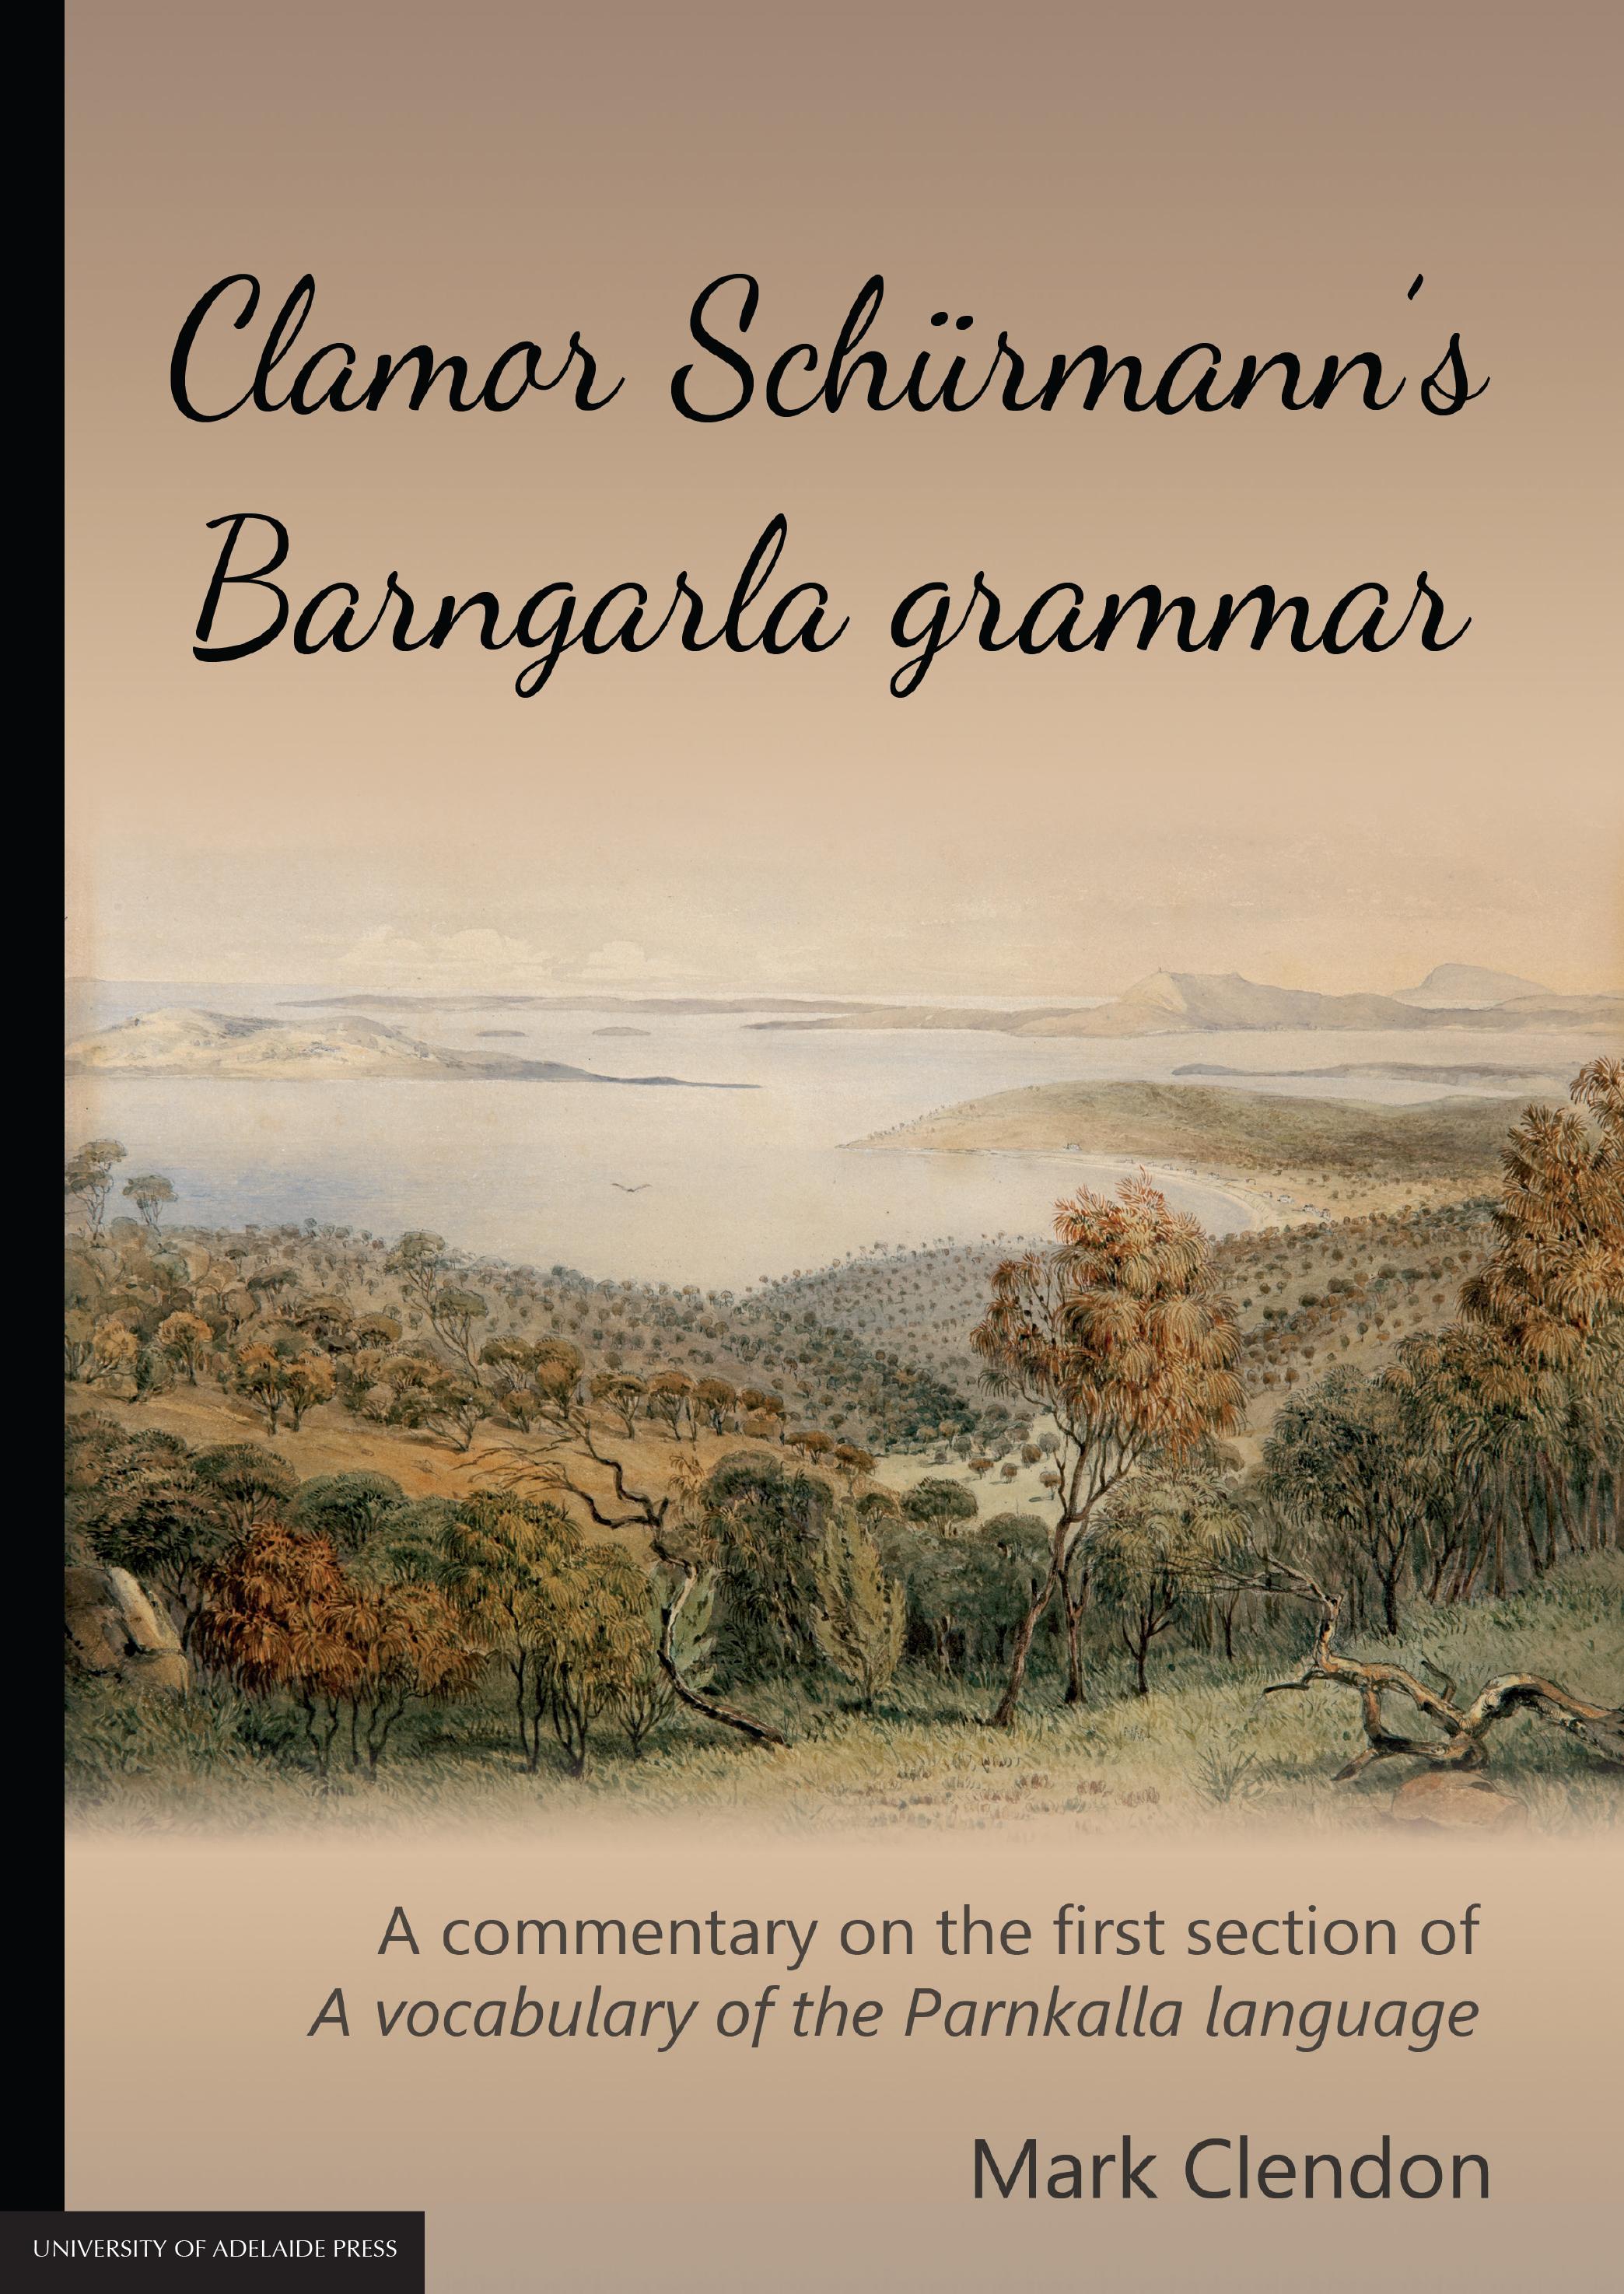 Clamor Schürmann’s Barngarla grammar